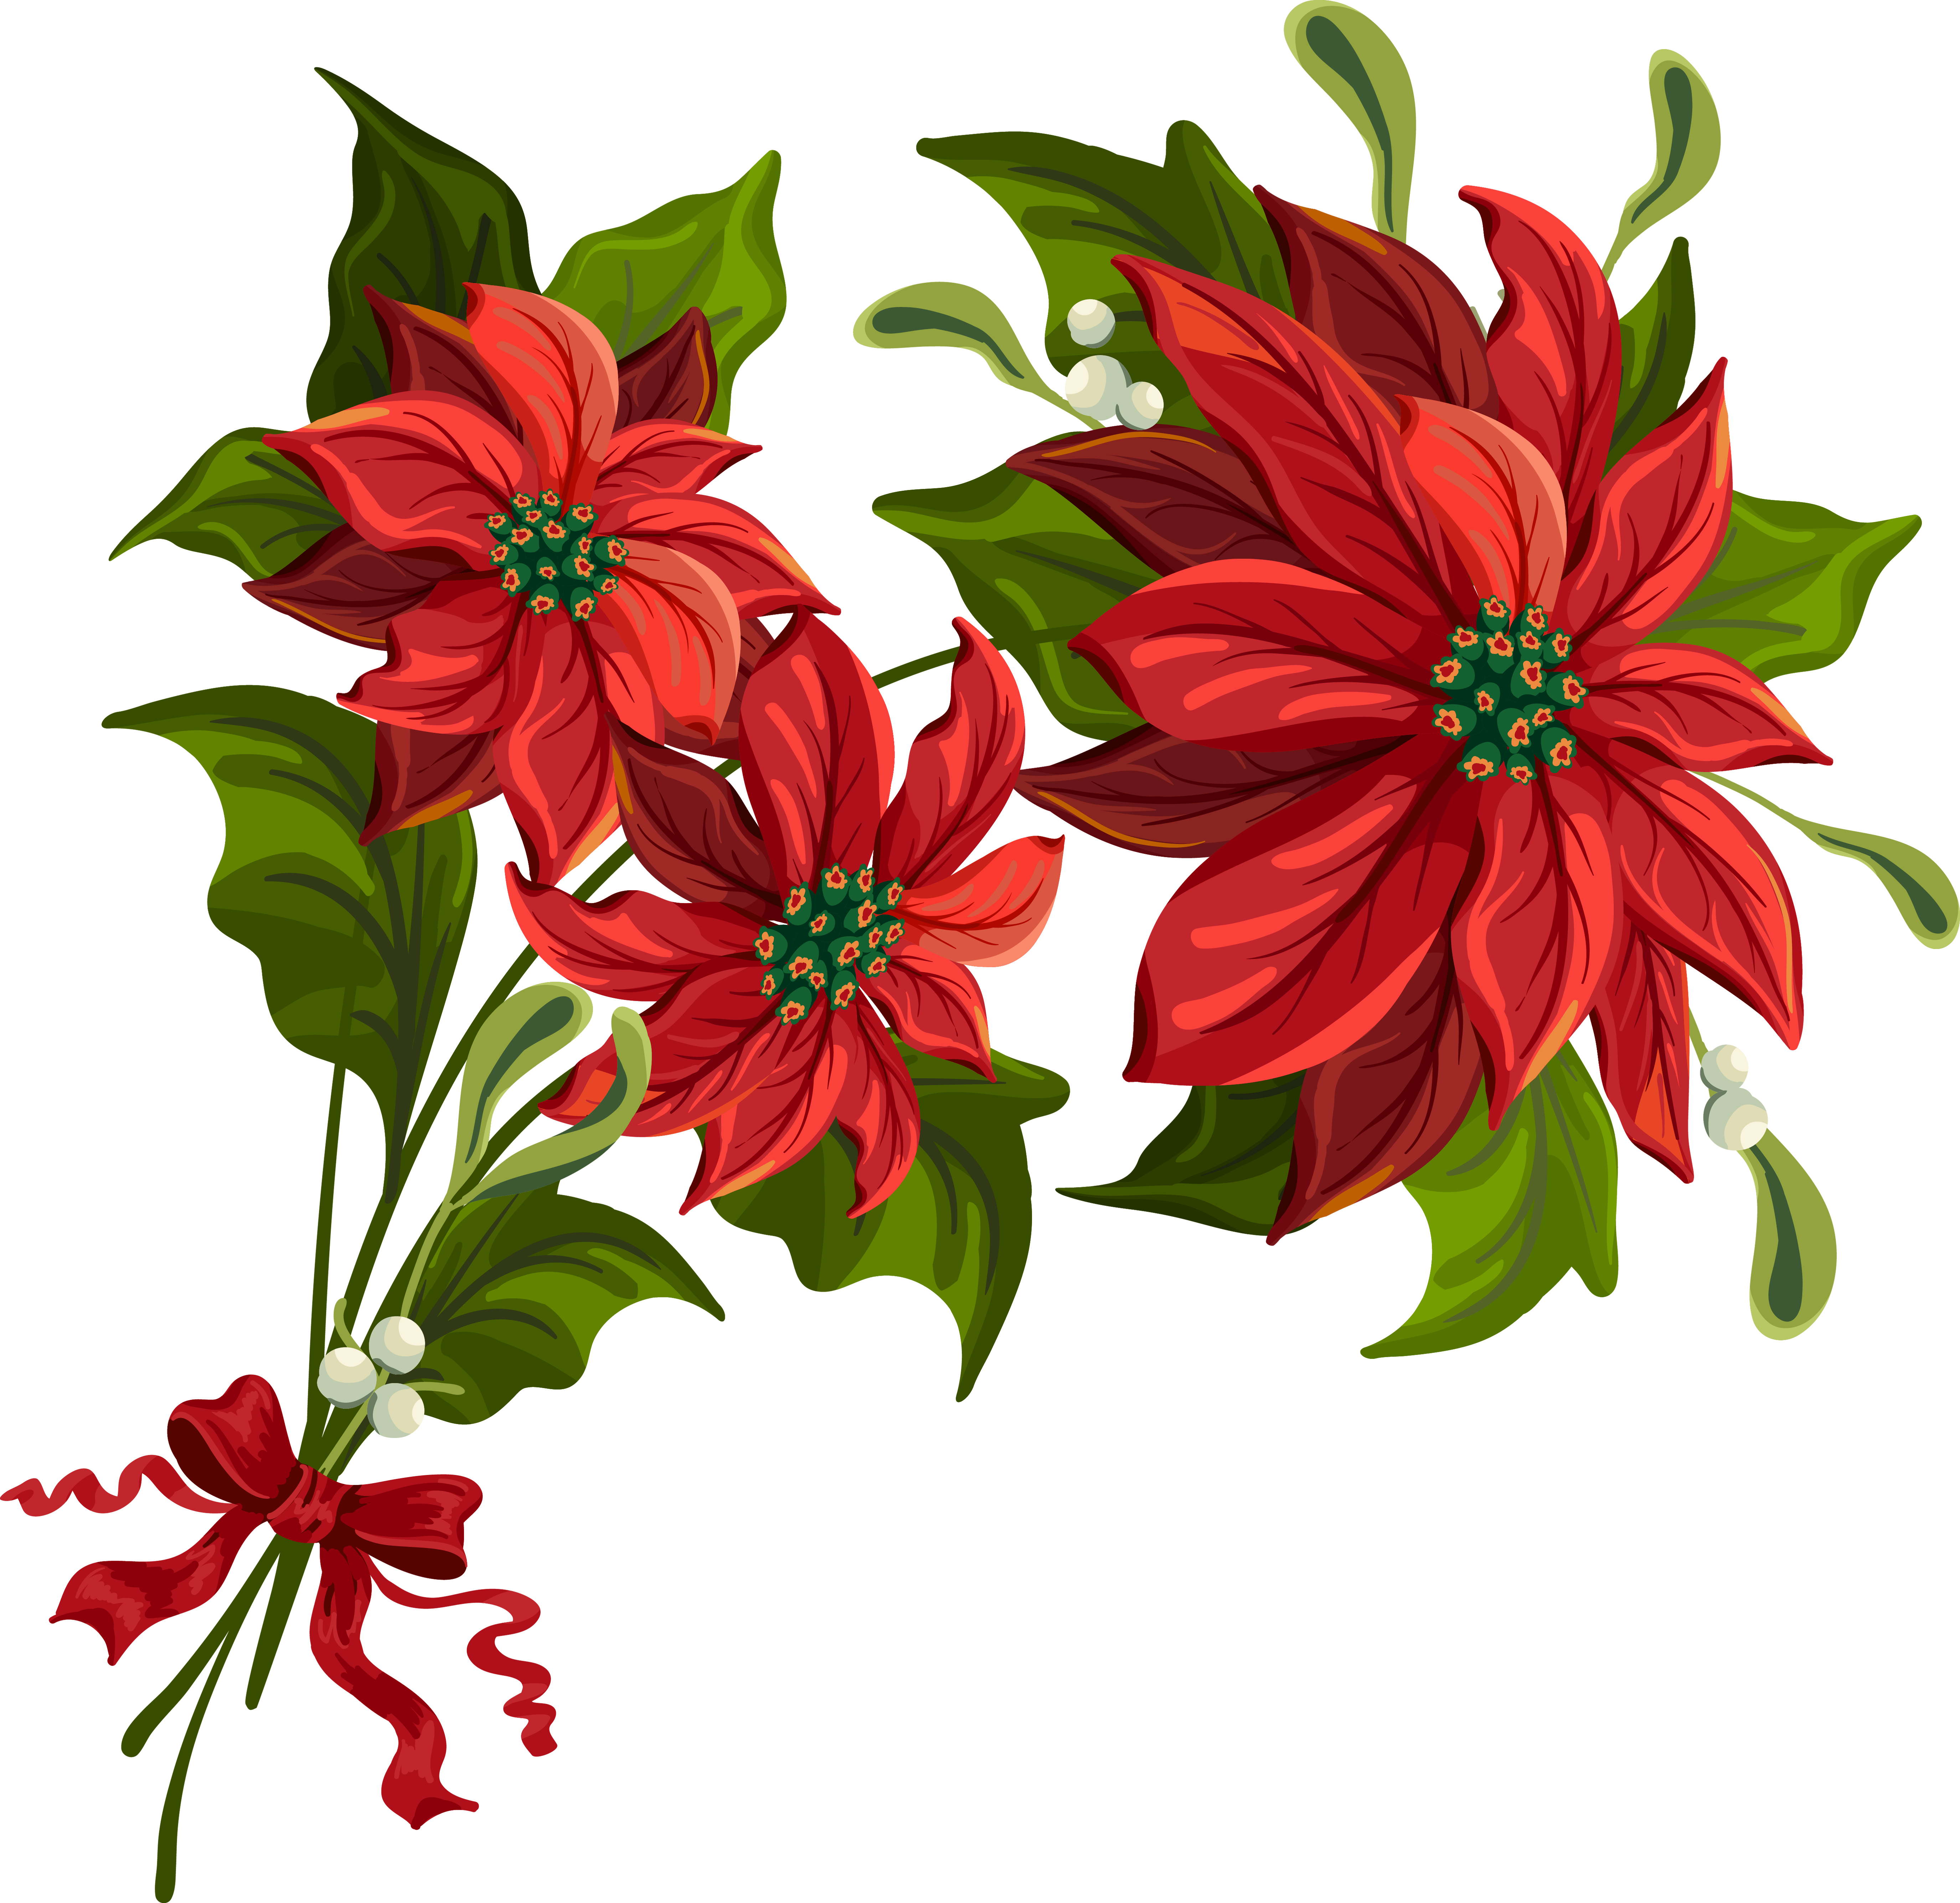 Poinsettia Image